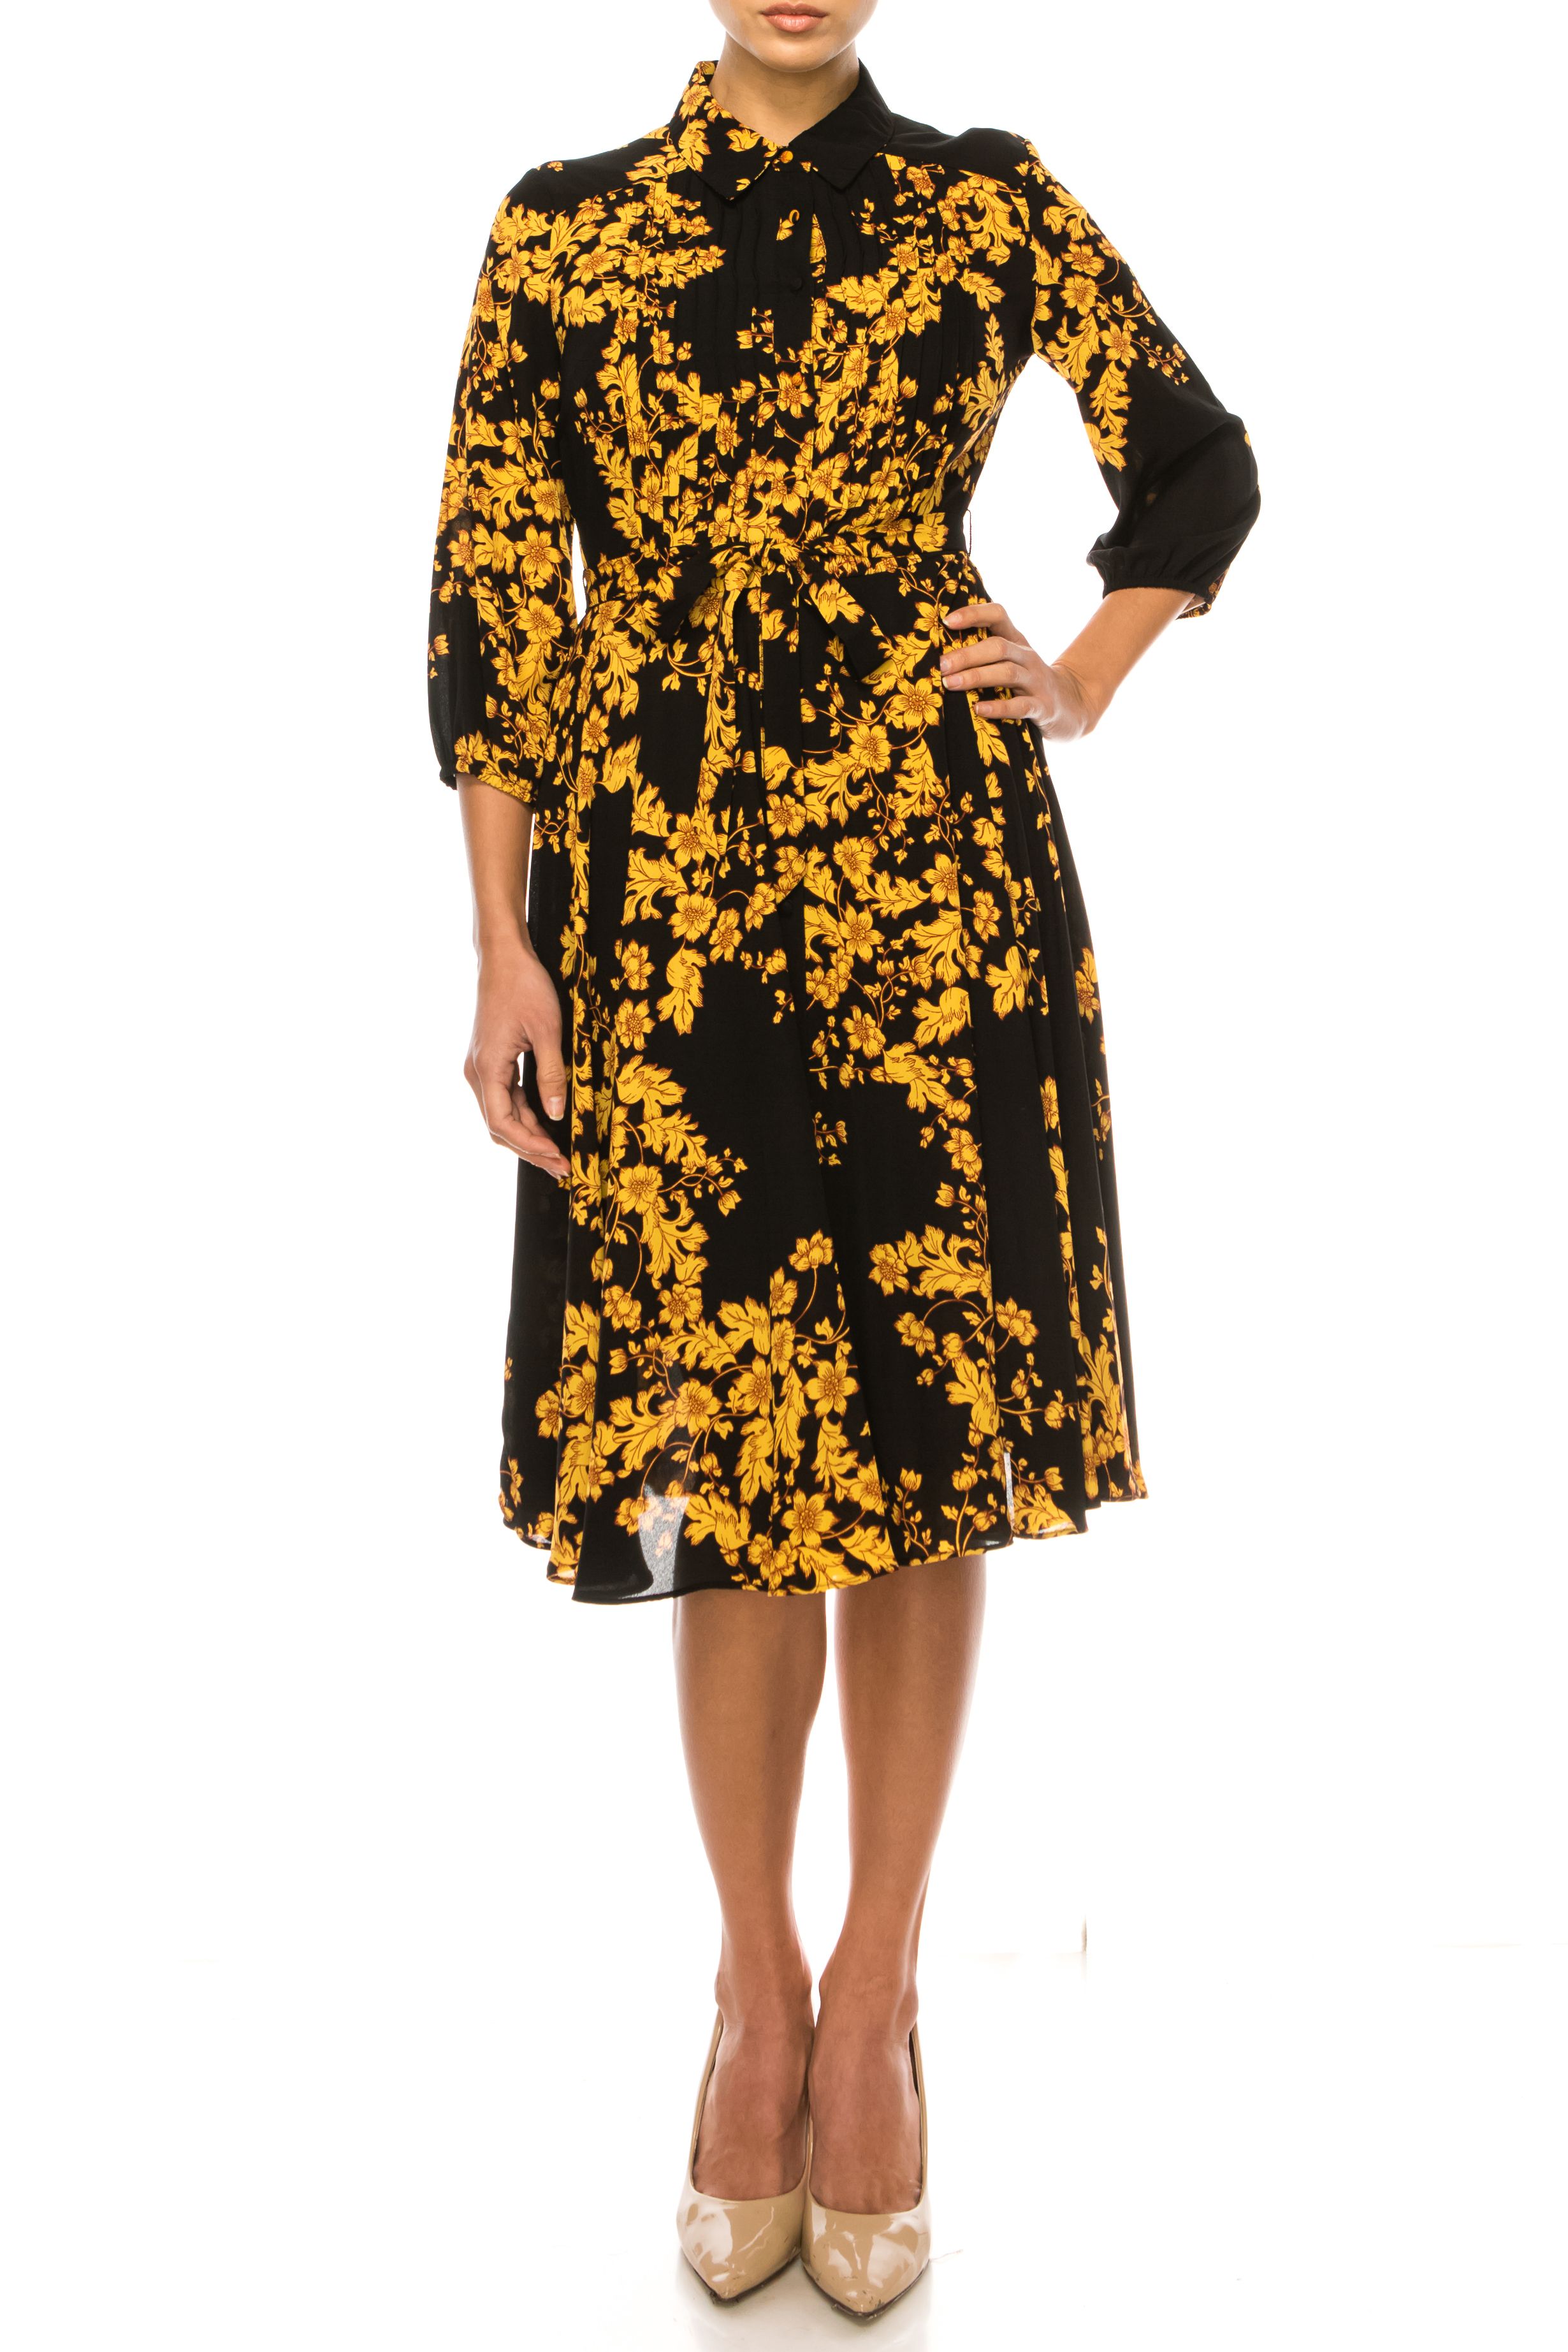 Nanette Nanette Lepore Women's Slvls Jacquard F&f Midi Dress